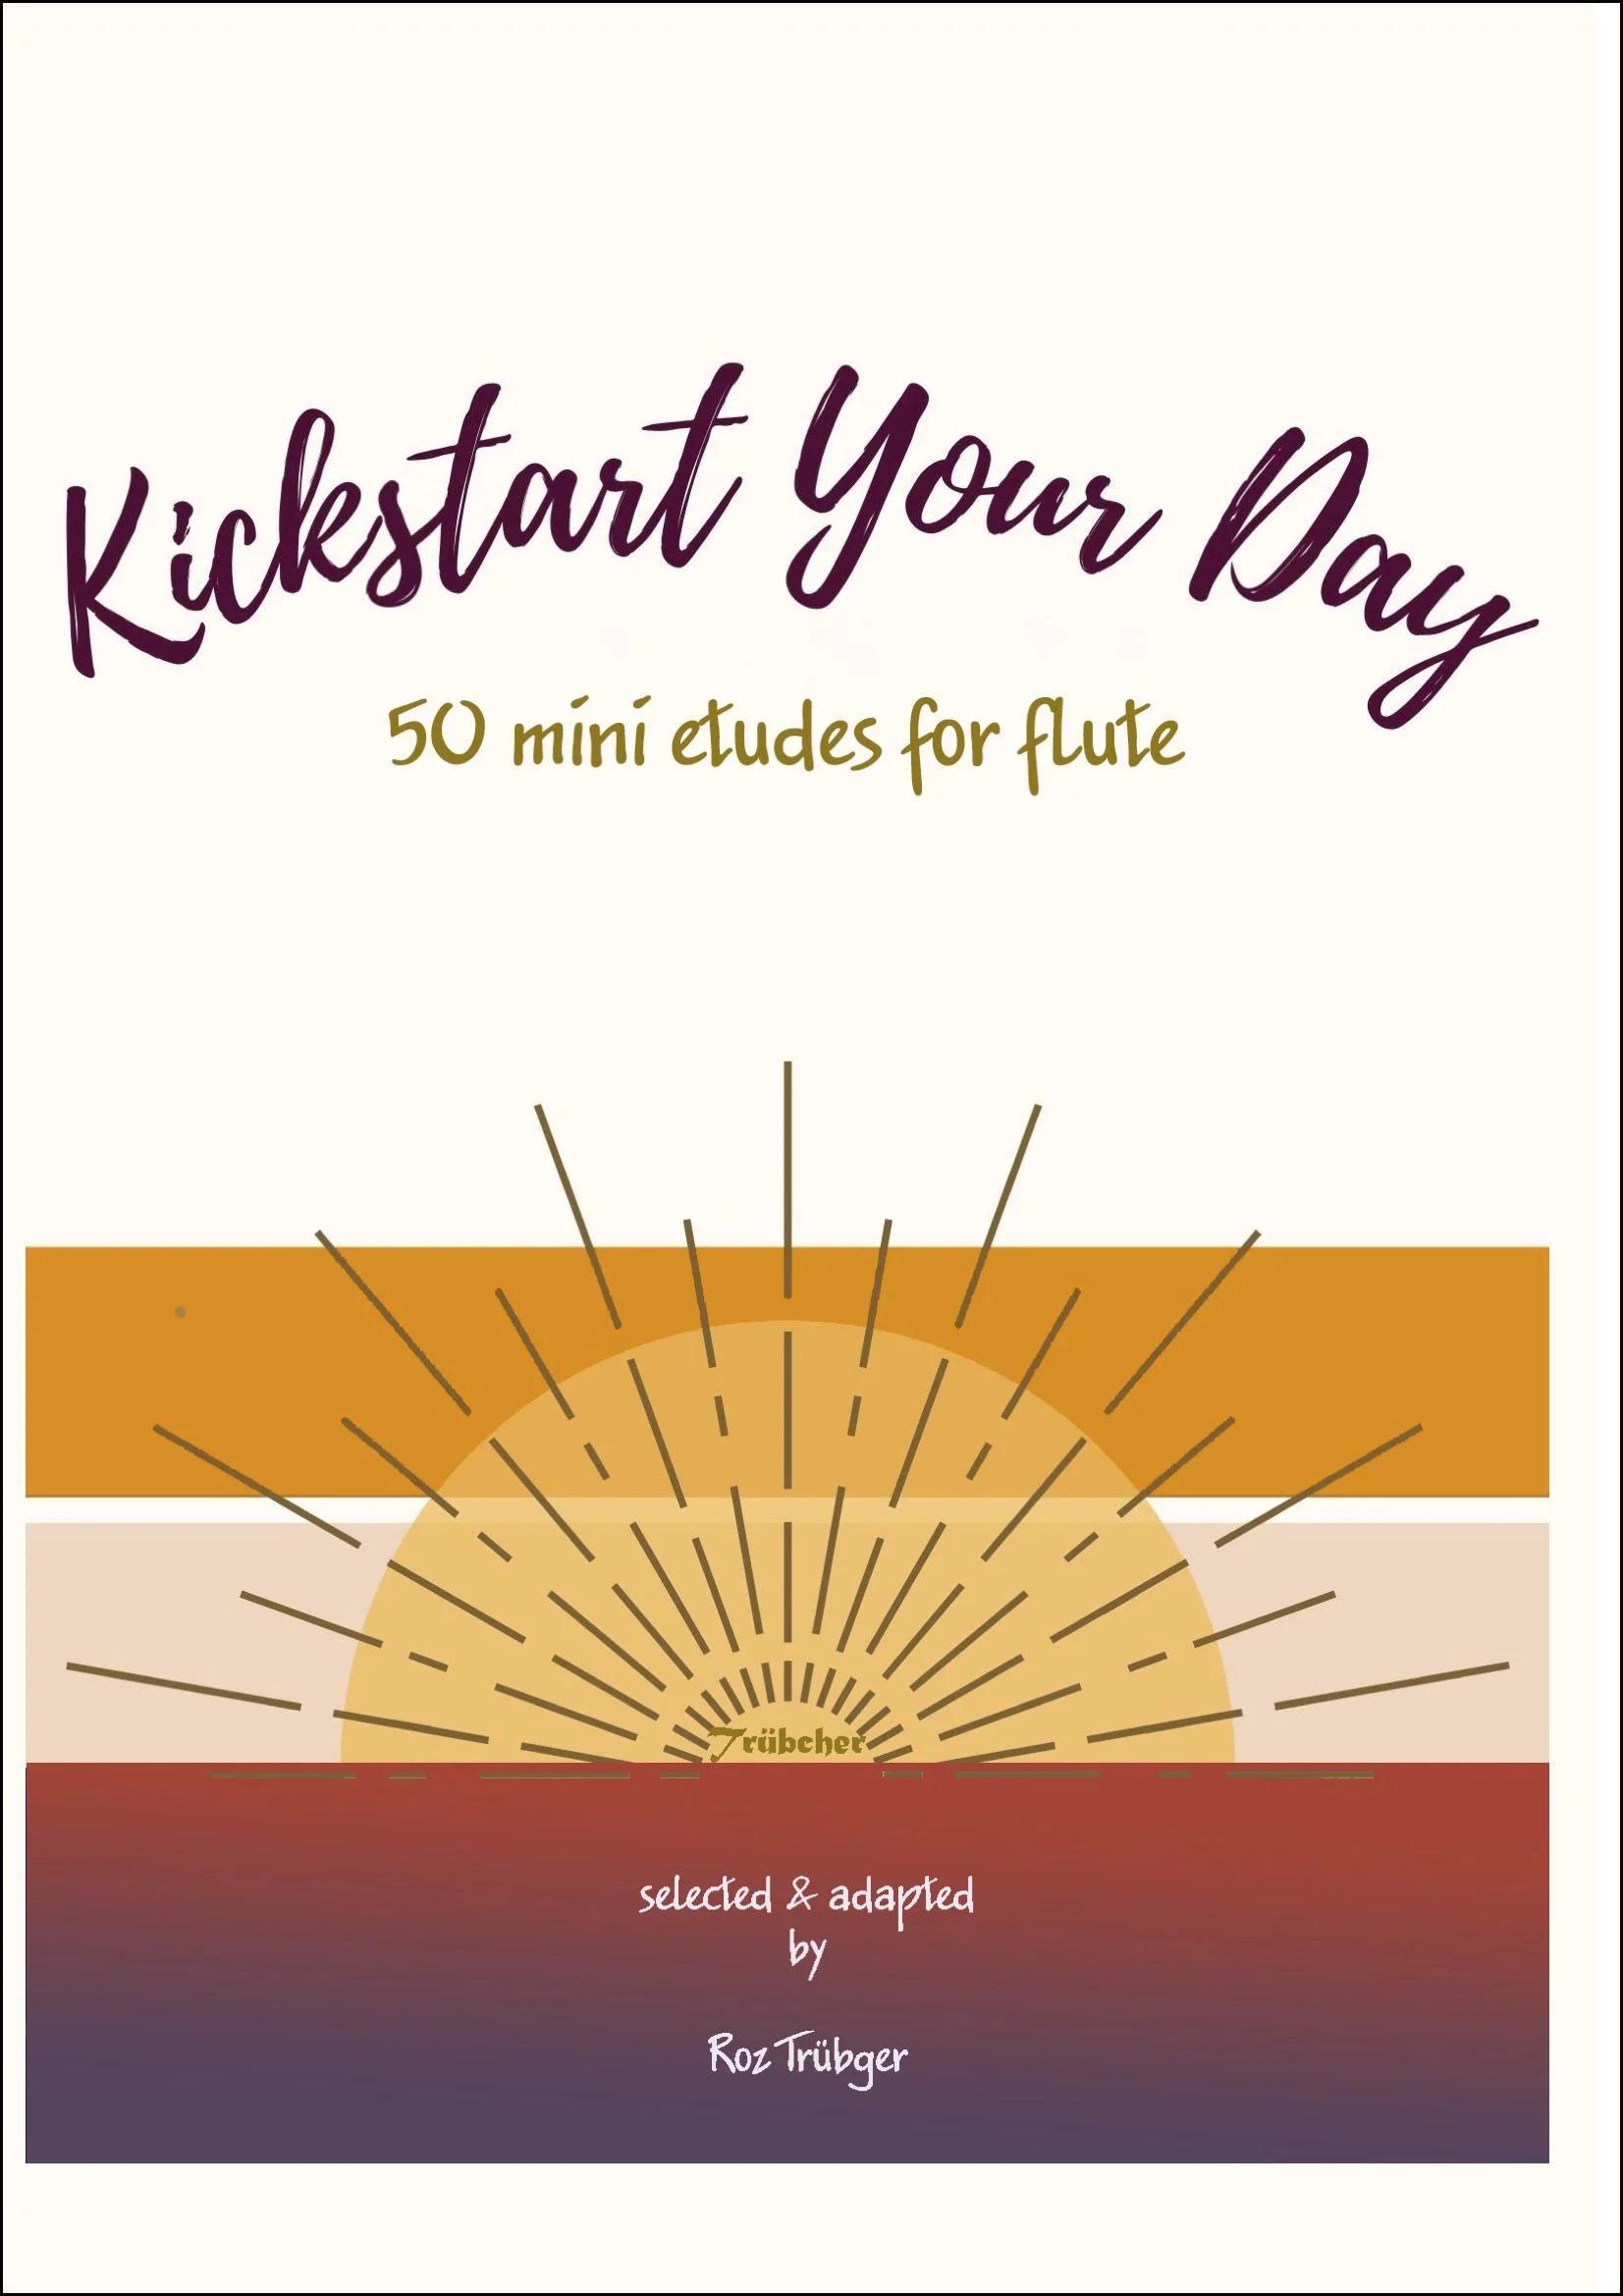 Kickstart Your Day: 50 mini etudes for flute (or piccolo) | Suono Flauti